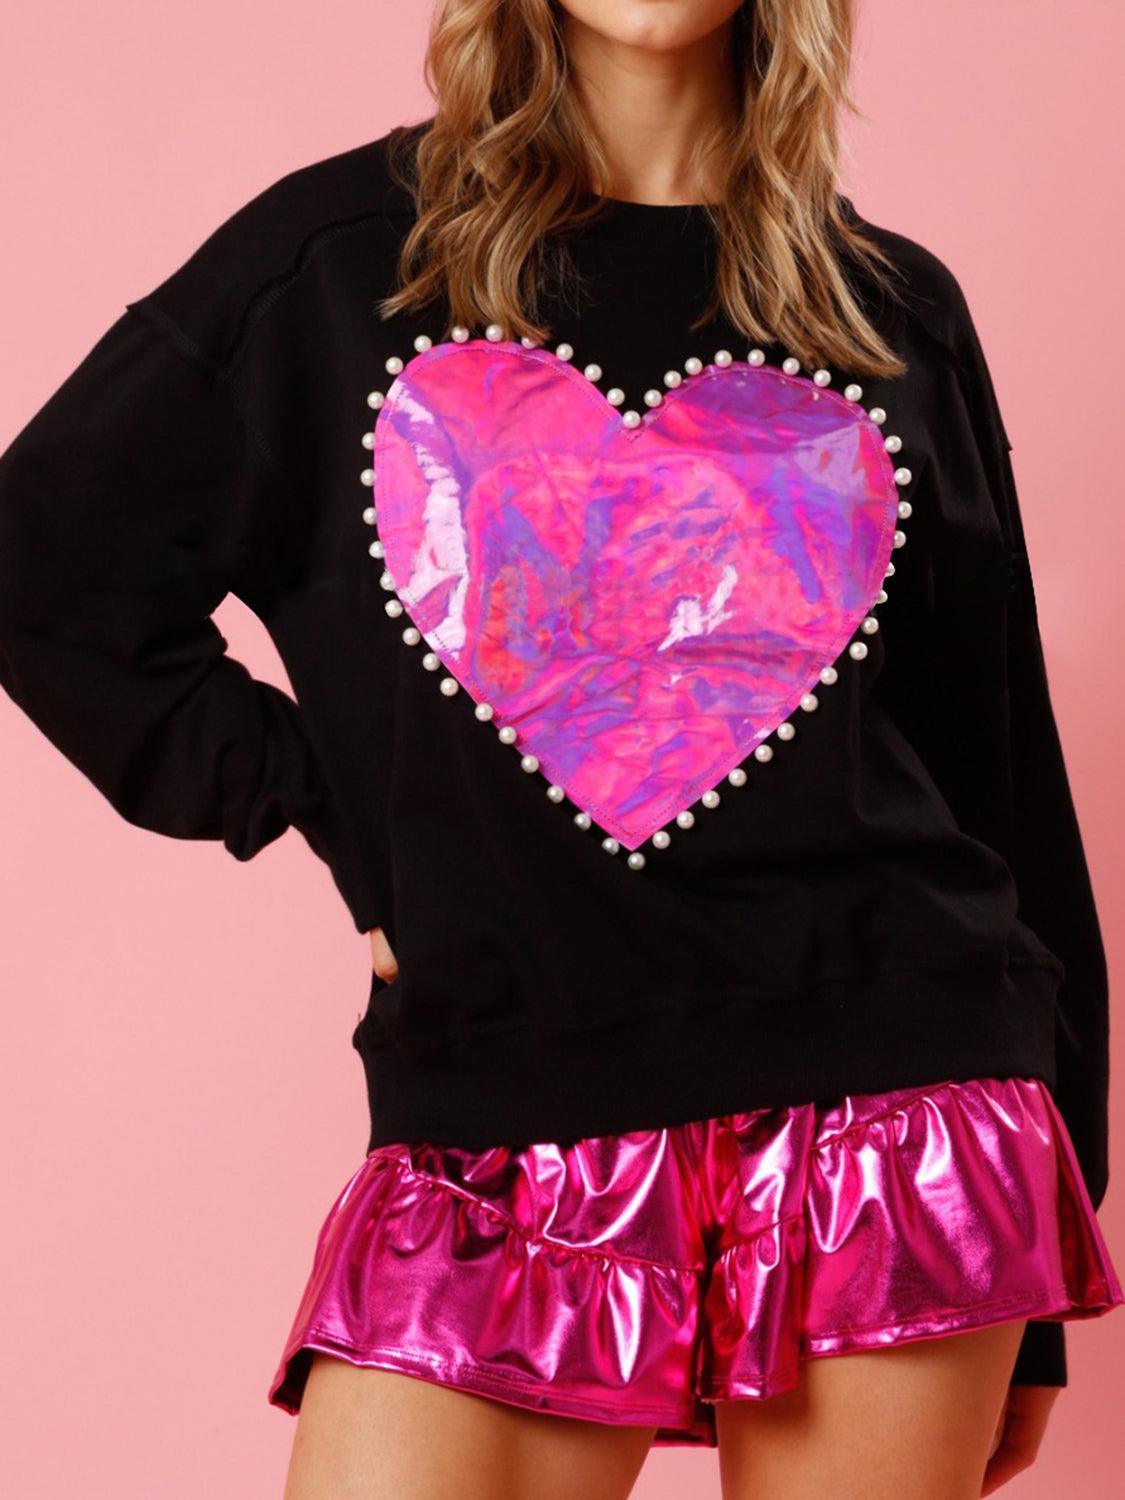 a woman wearing a black sweatshirt with a pink heart on it